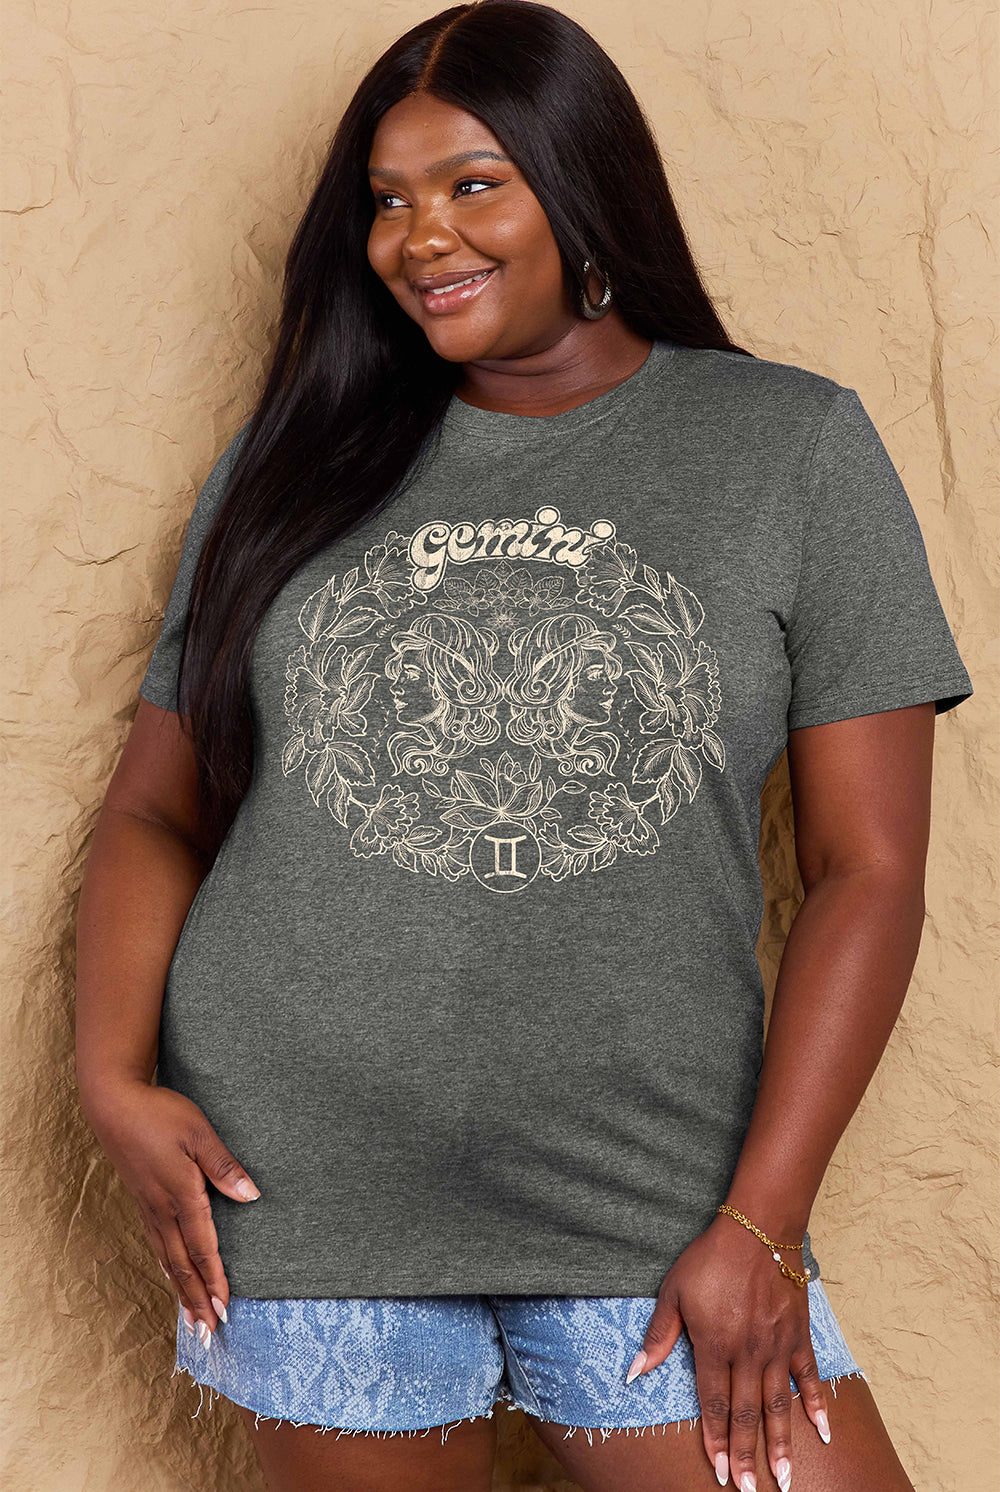 Simply Love Full Size GEMINI Graphic T-Shirt - Shirley's